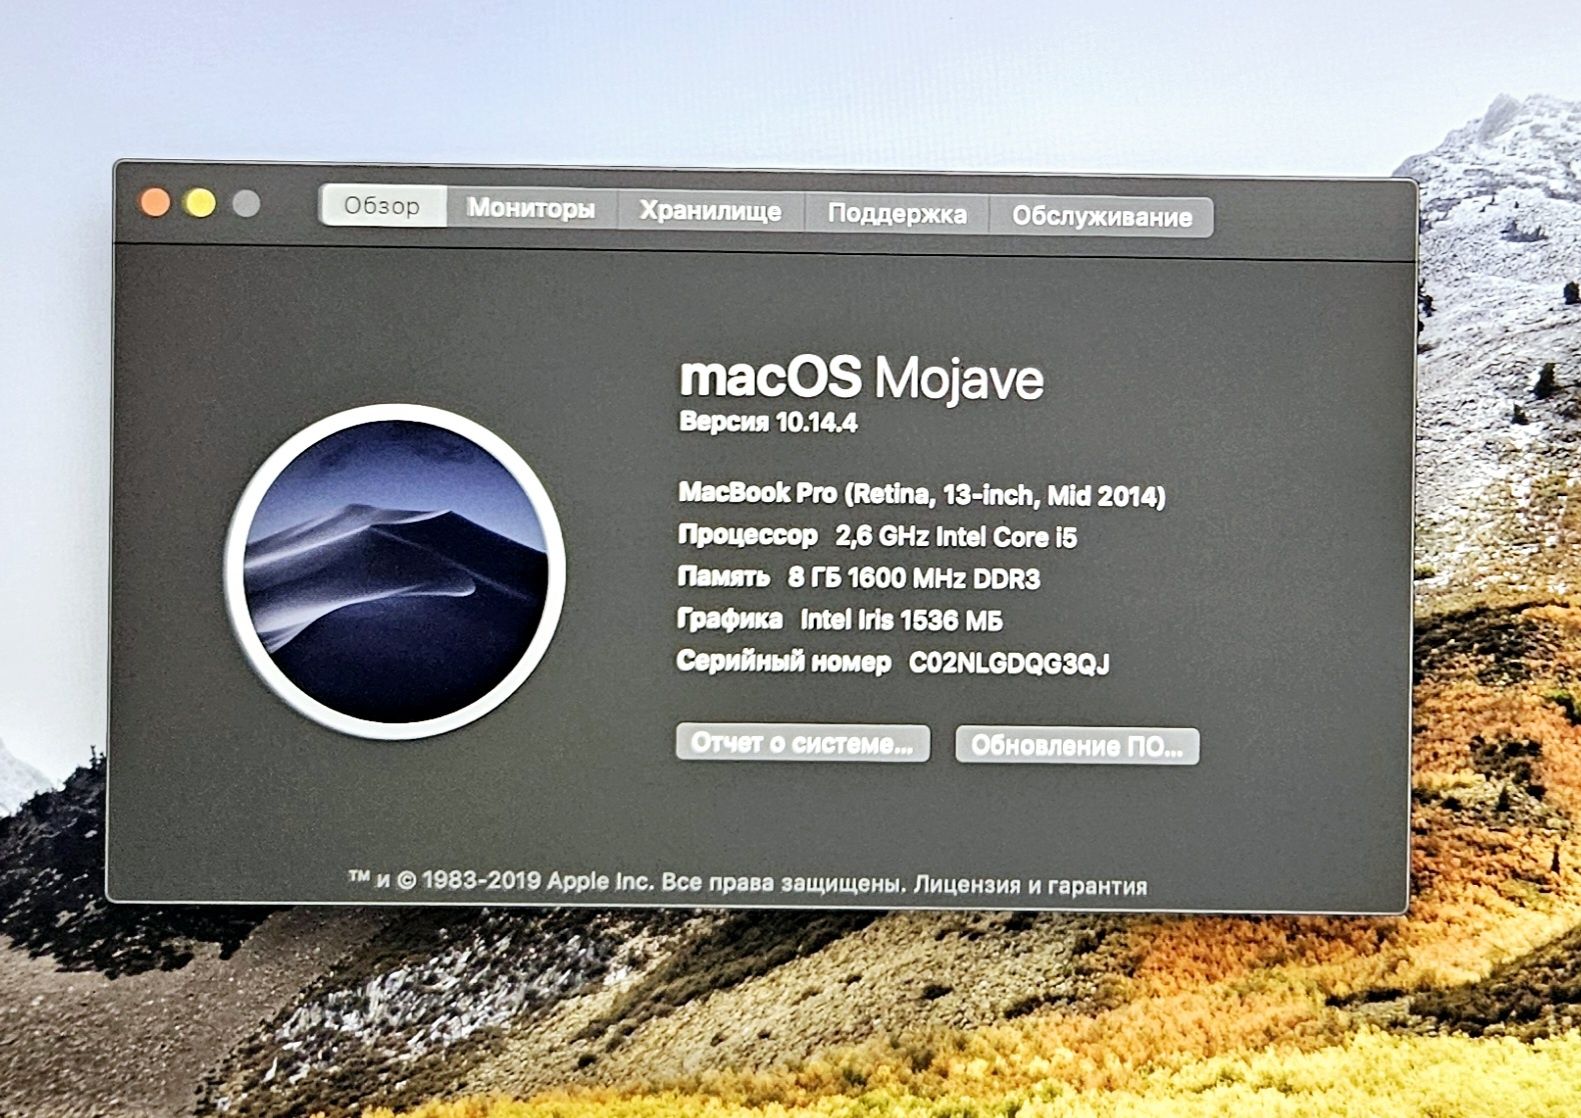 Macbook Pro 13 2014/Core i 5/8/256GB Код 3654 Нур ломбард